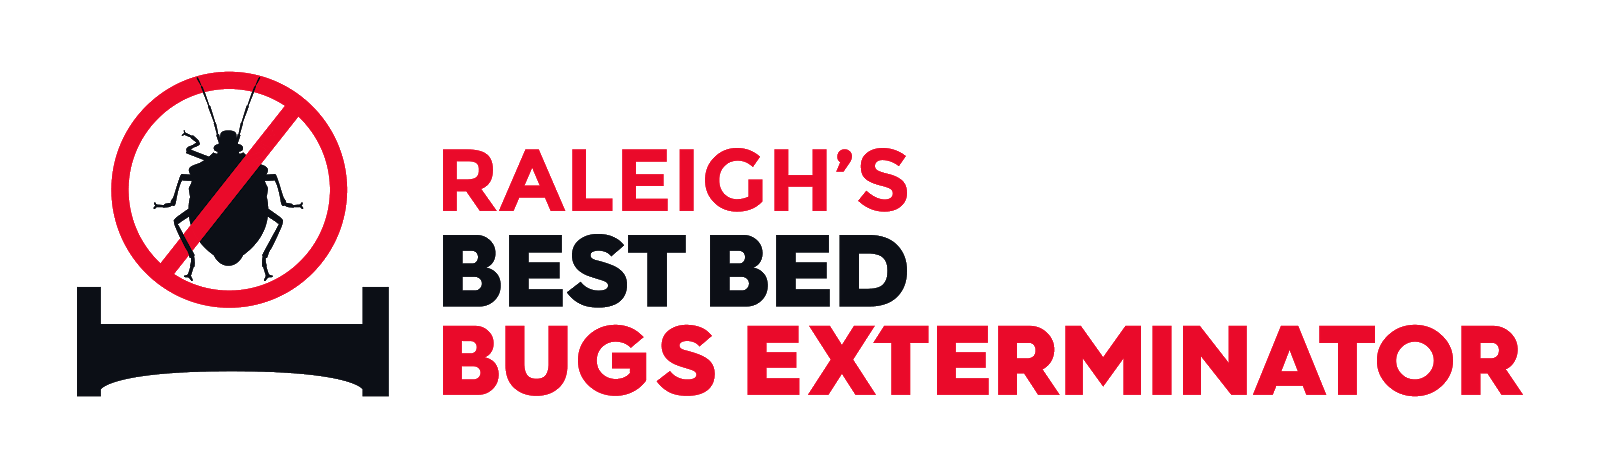 Raleigh's Best Bed Bug Exterminator